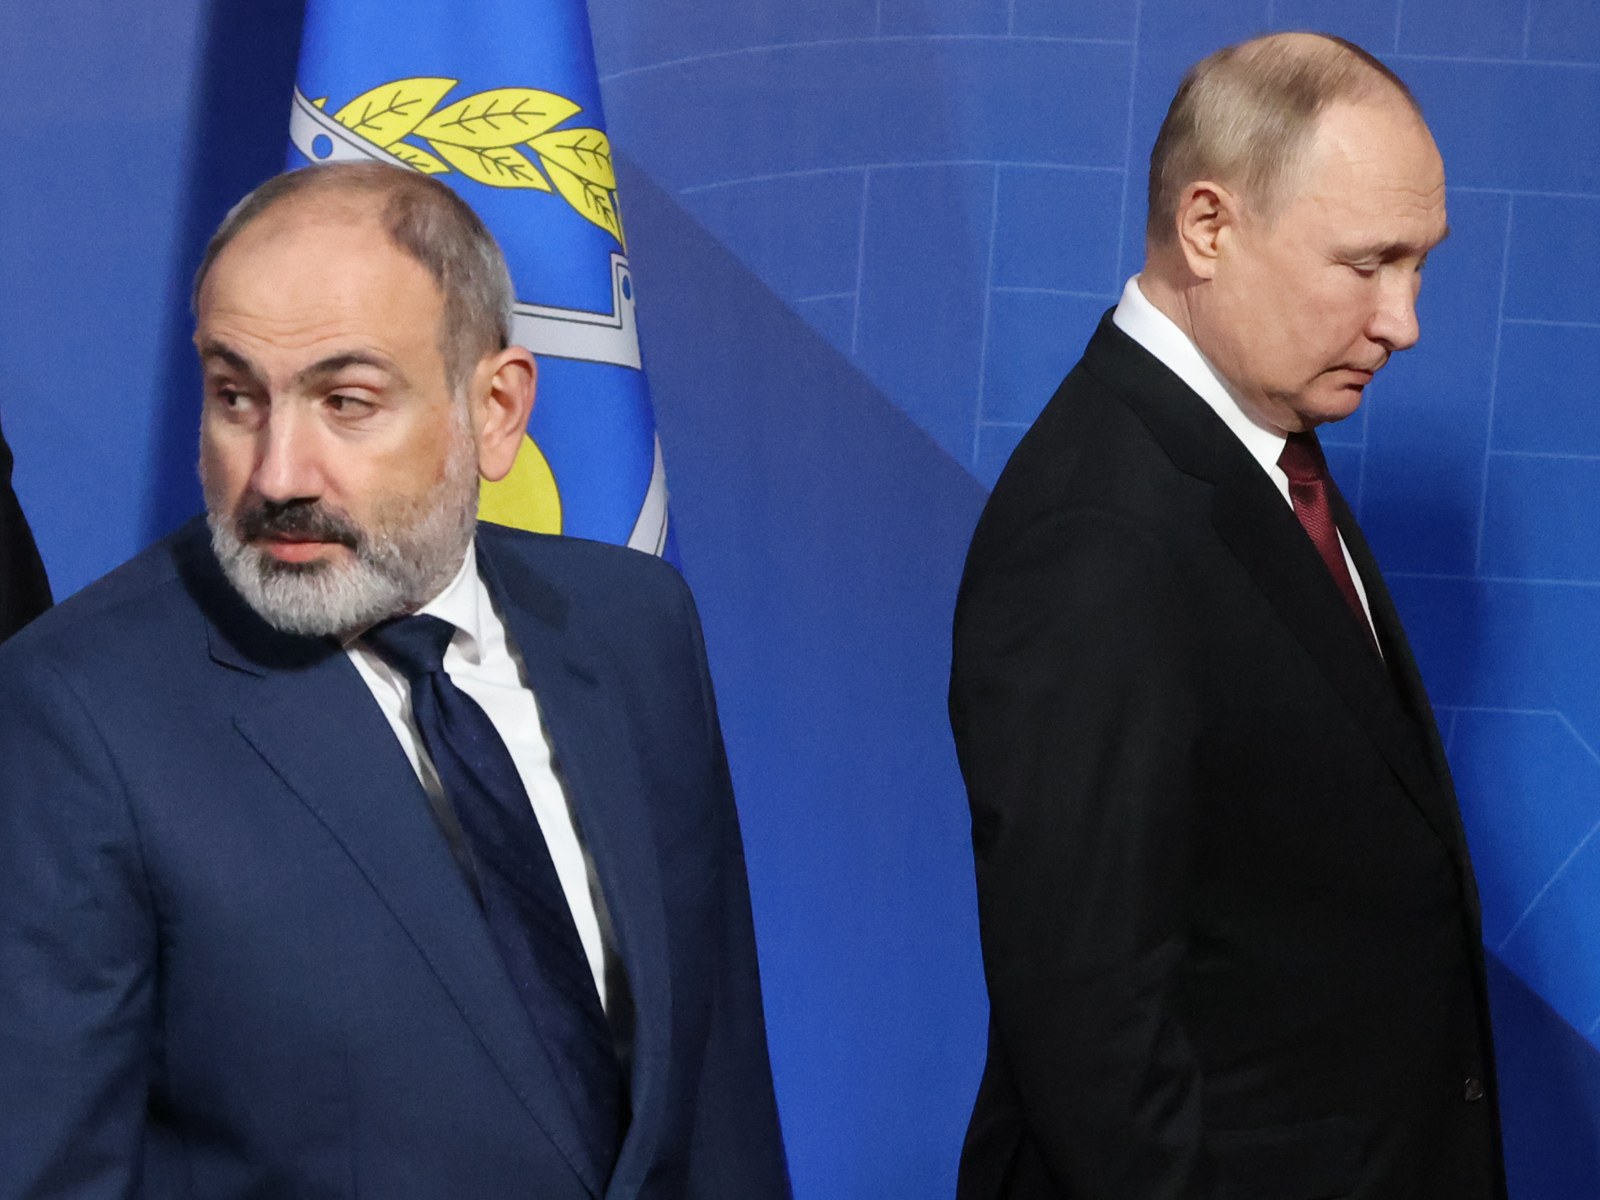 Putin’s grip on regional allies loosens again after Armenia snub 4